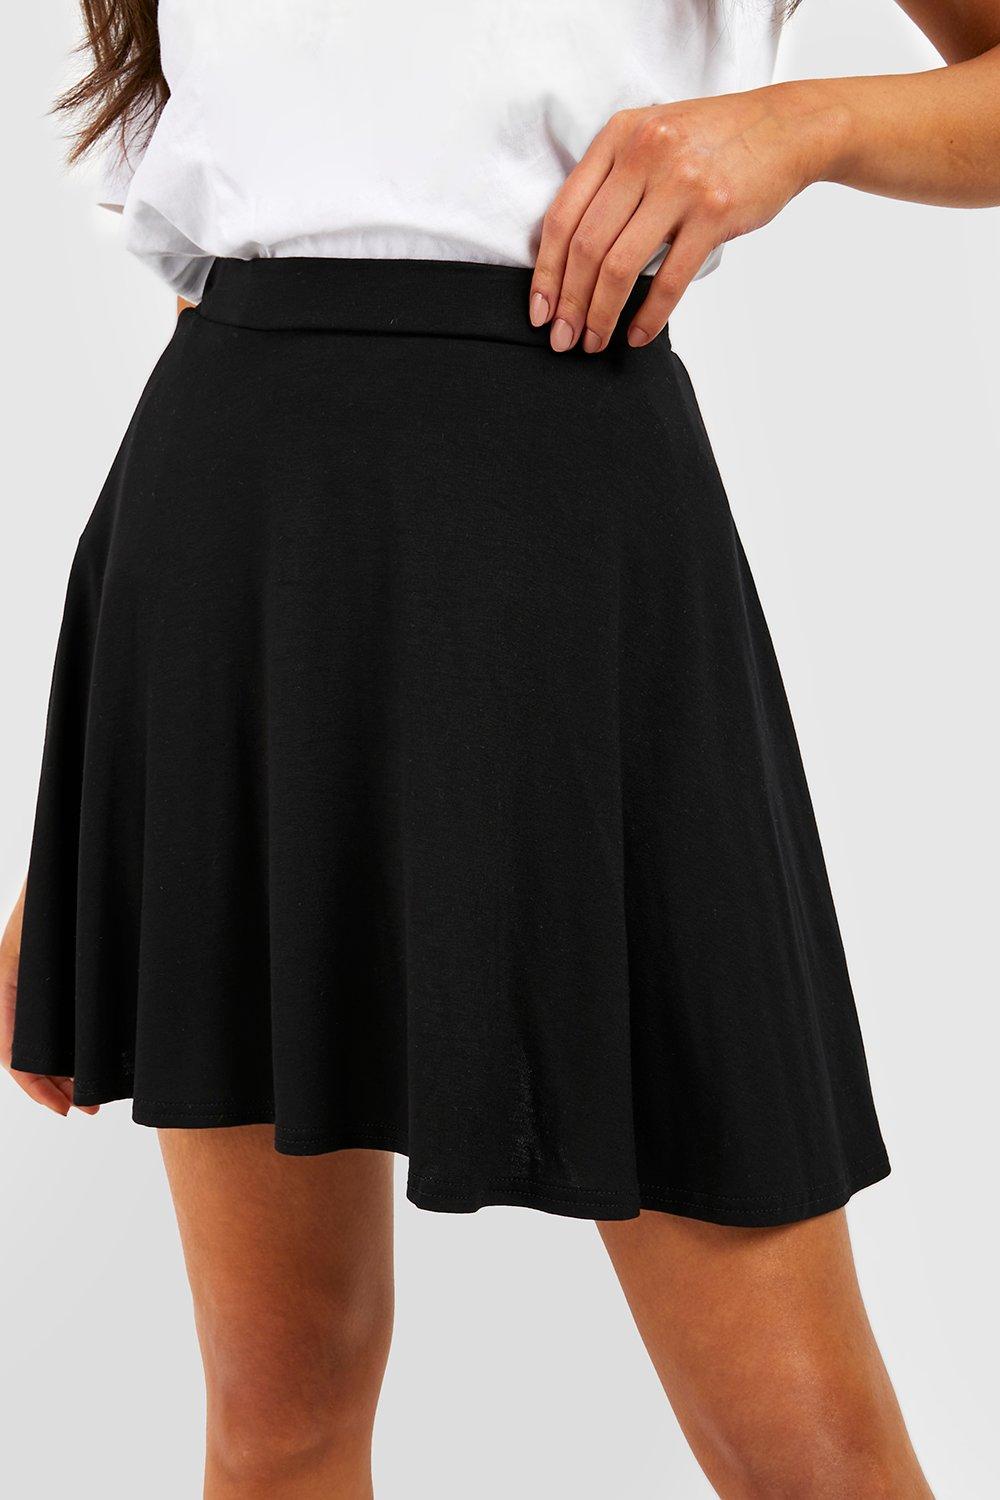 high-waisted skirt